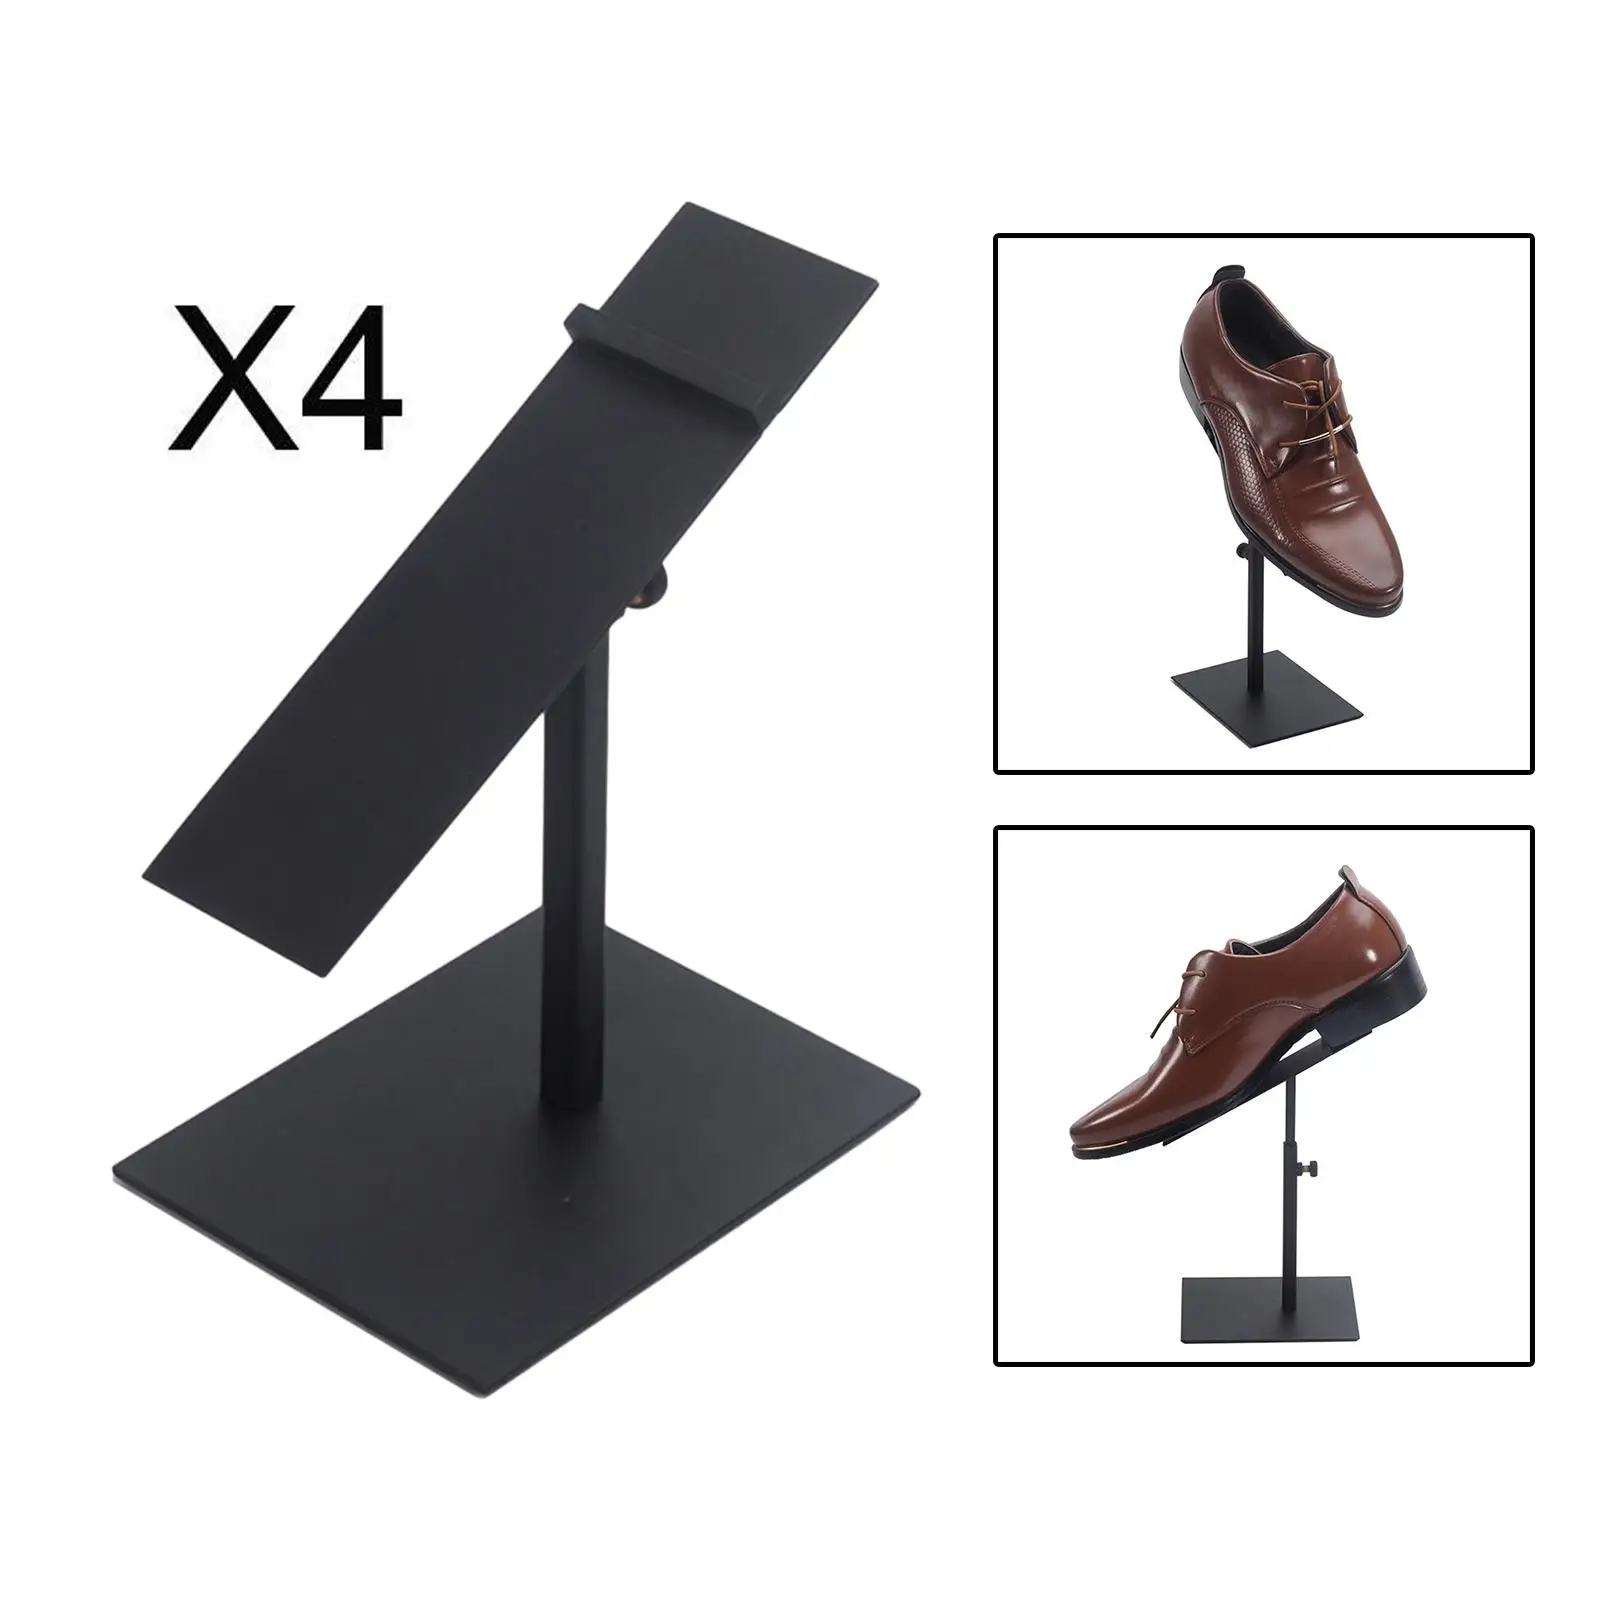 4x Metal  Rack Shoe Stacker  Adjustable Storage Shoe Rack Holder for Closet Organization